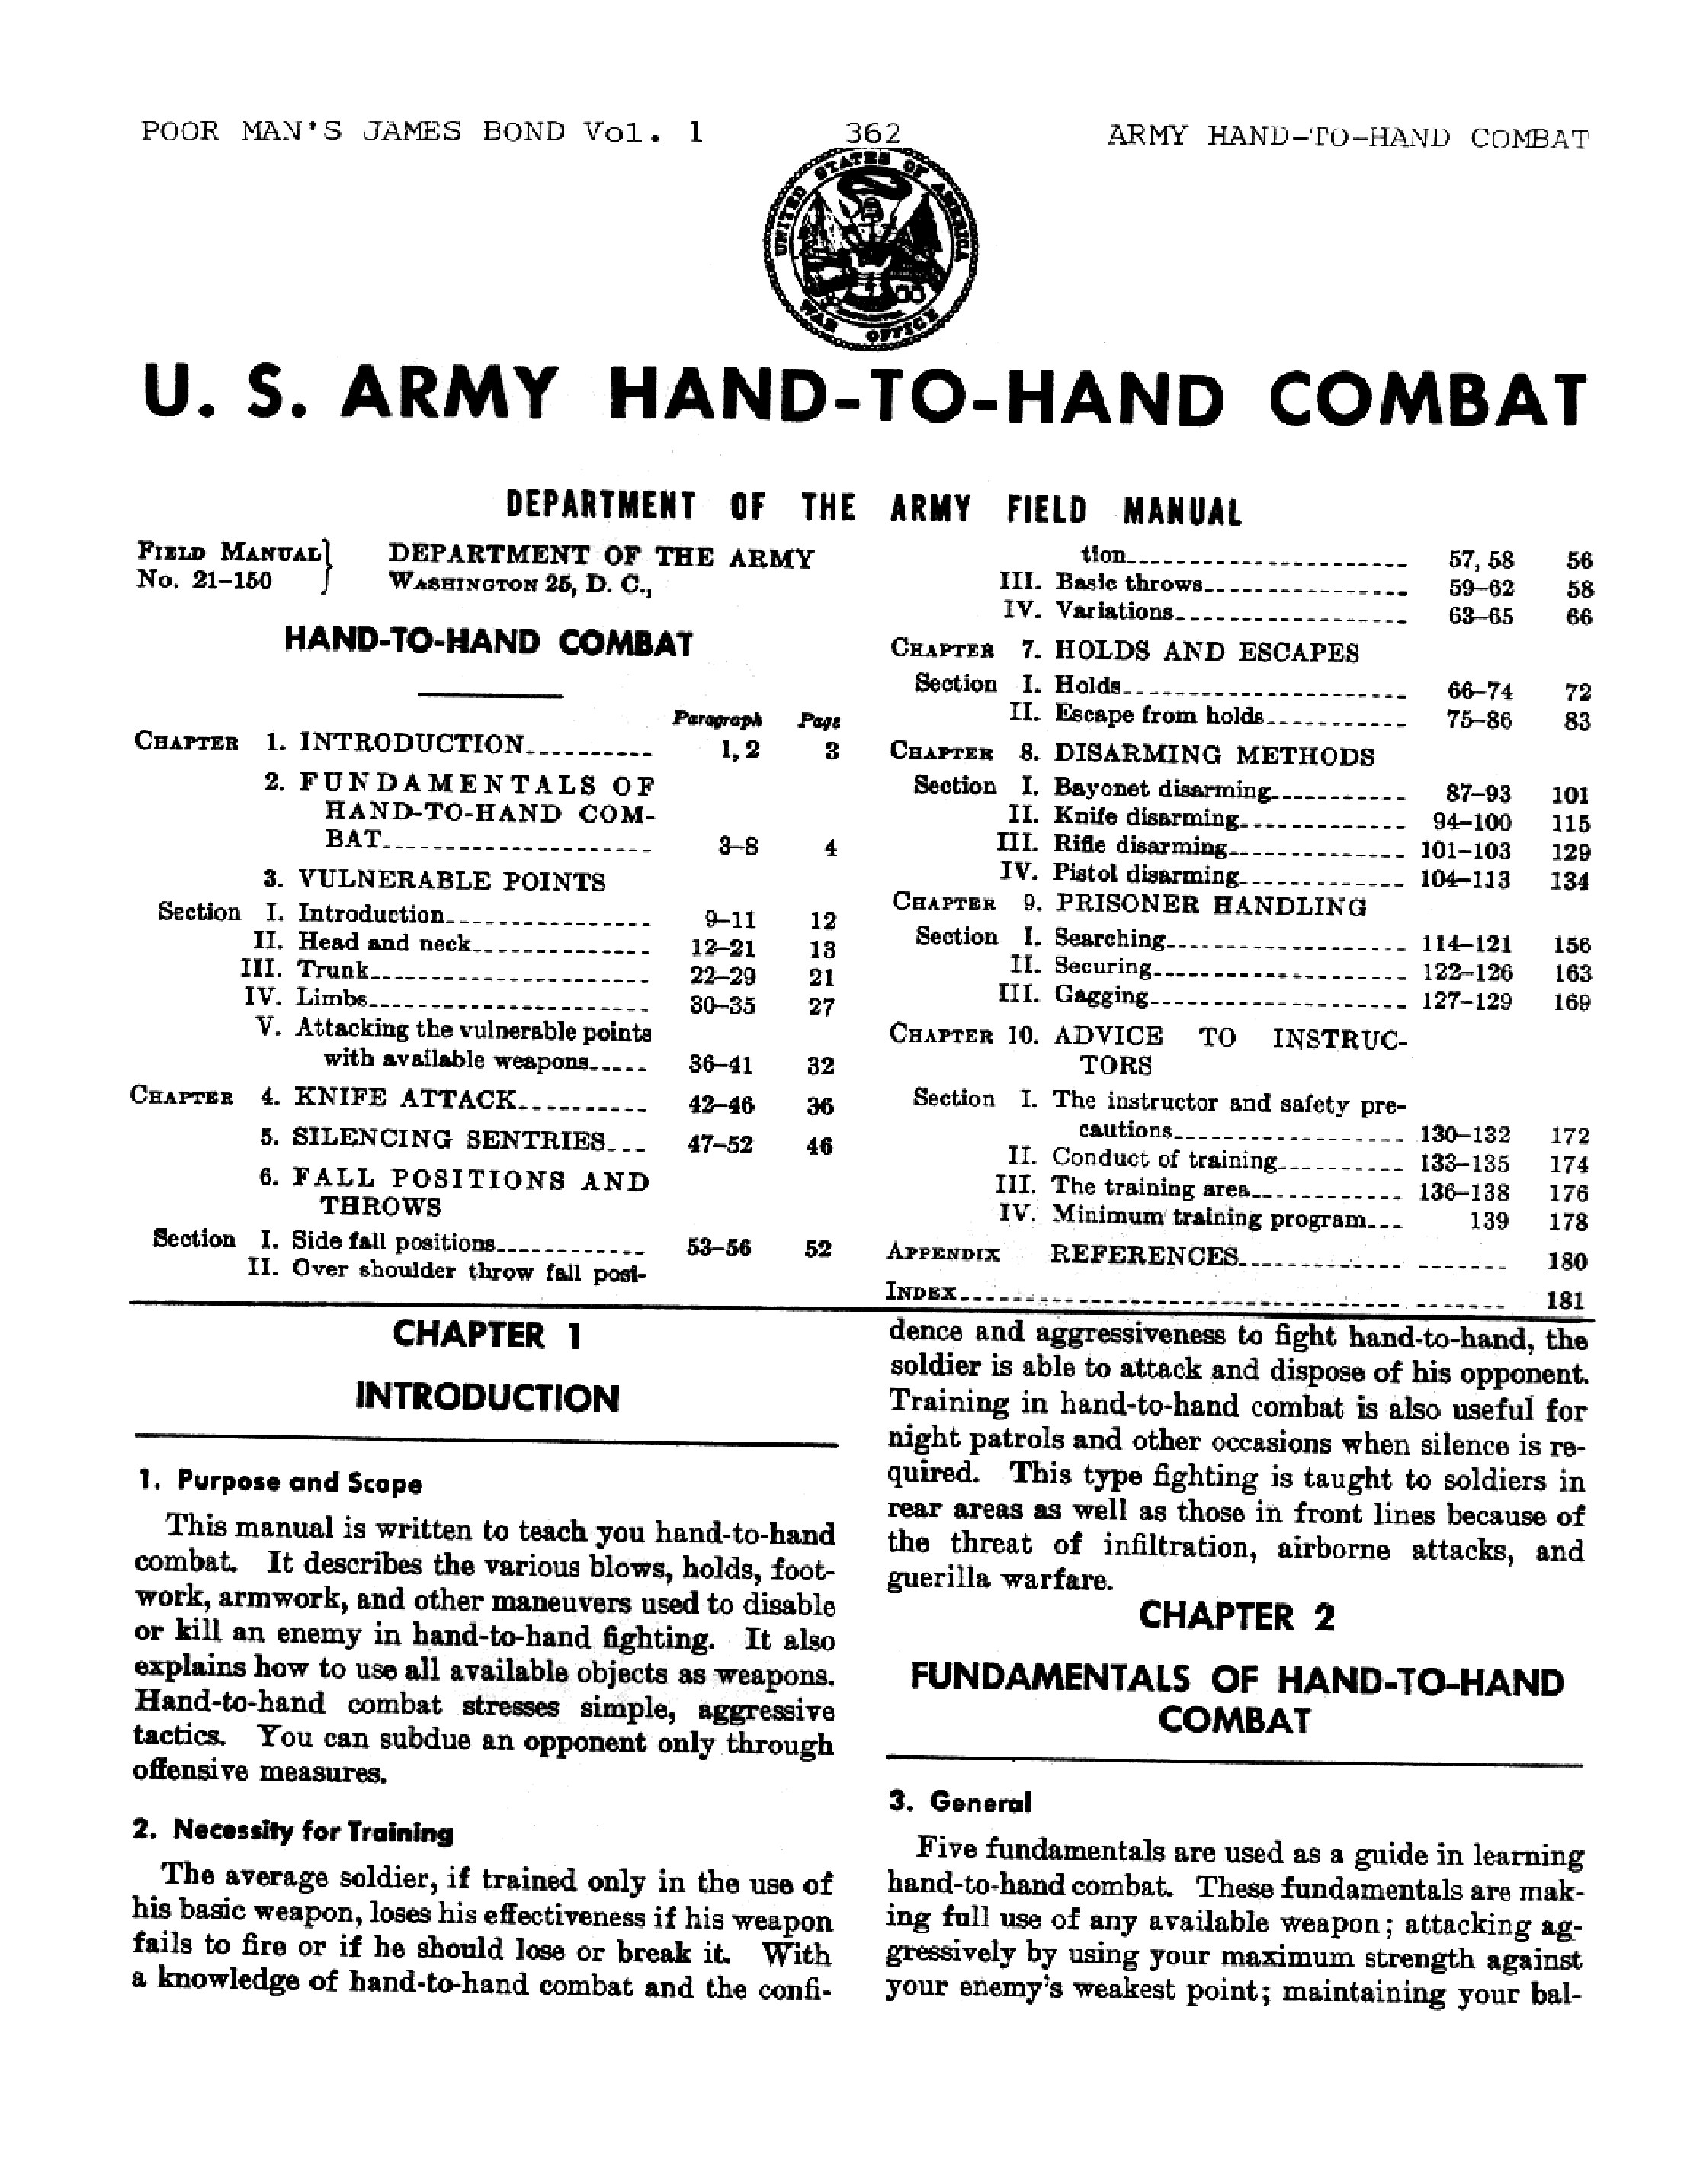 FM 21-150 Hand-to-Hand Combat (1954)